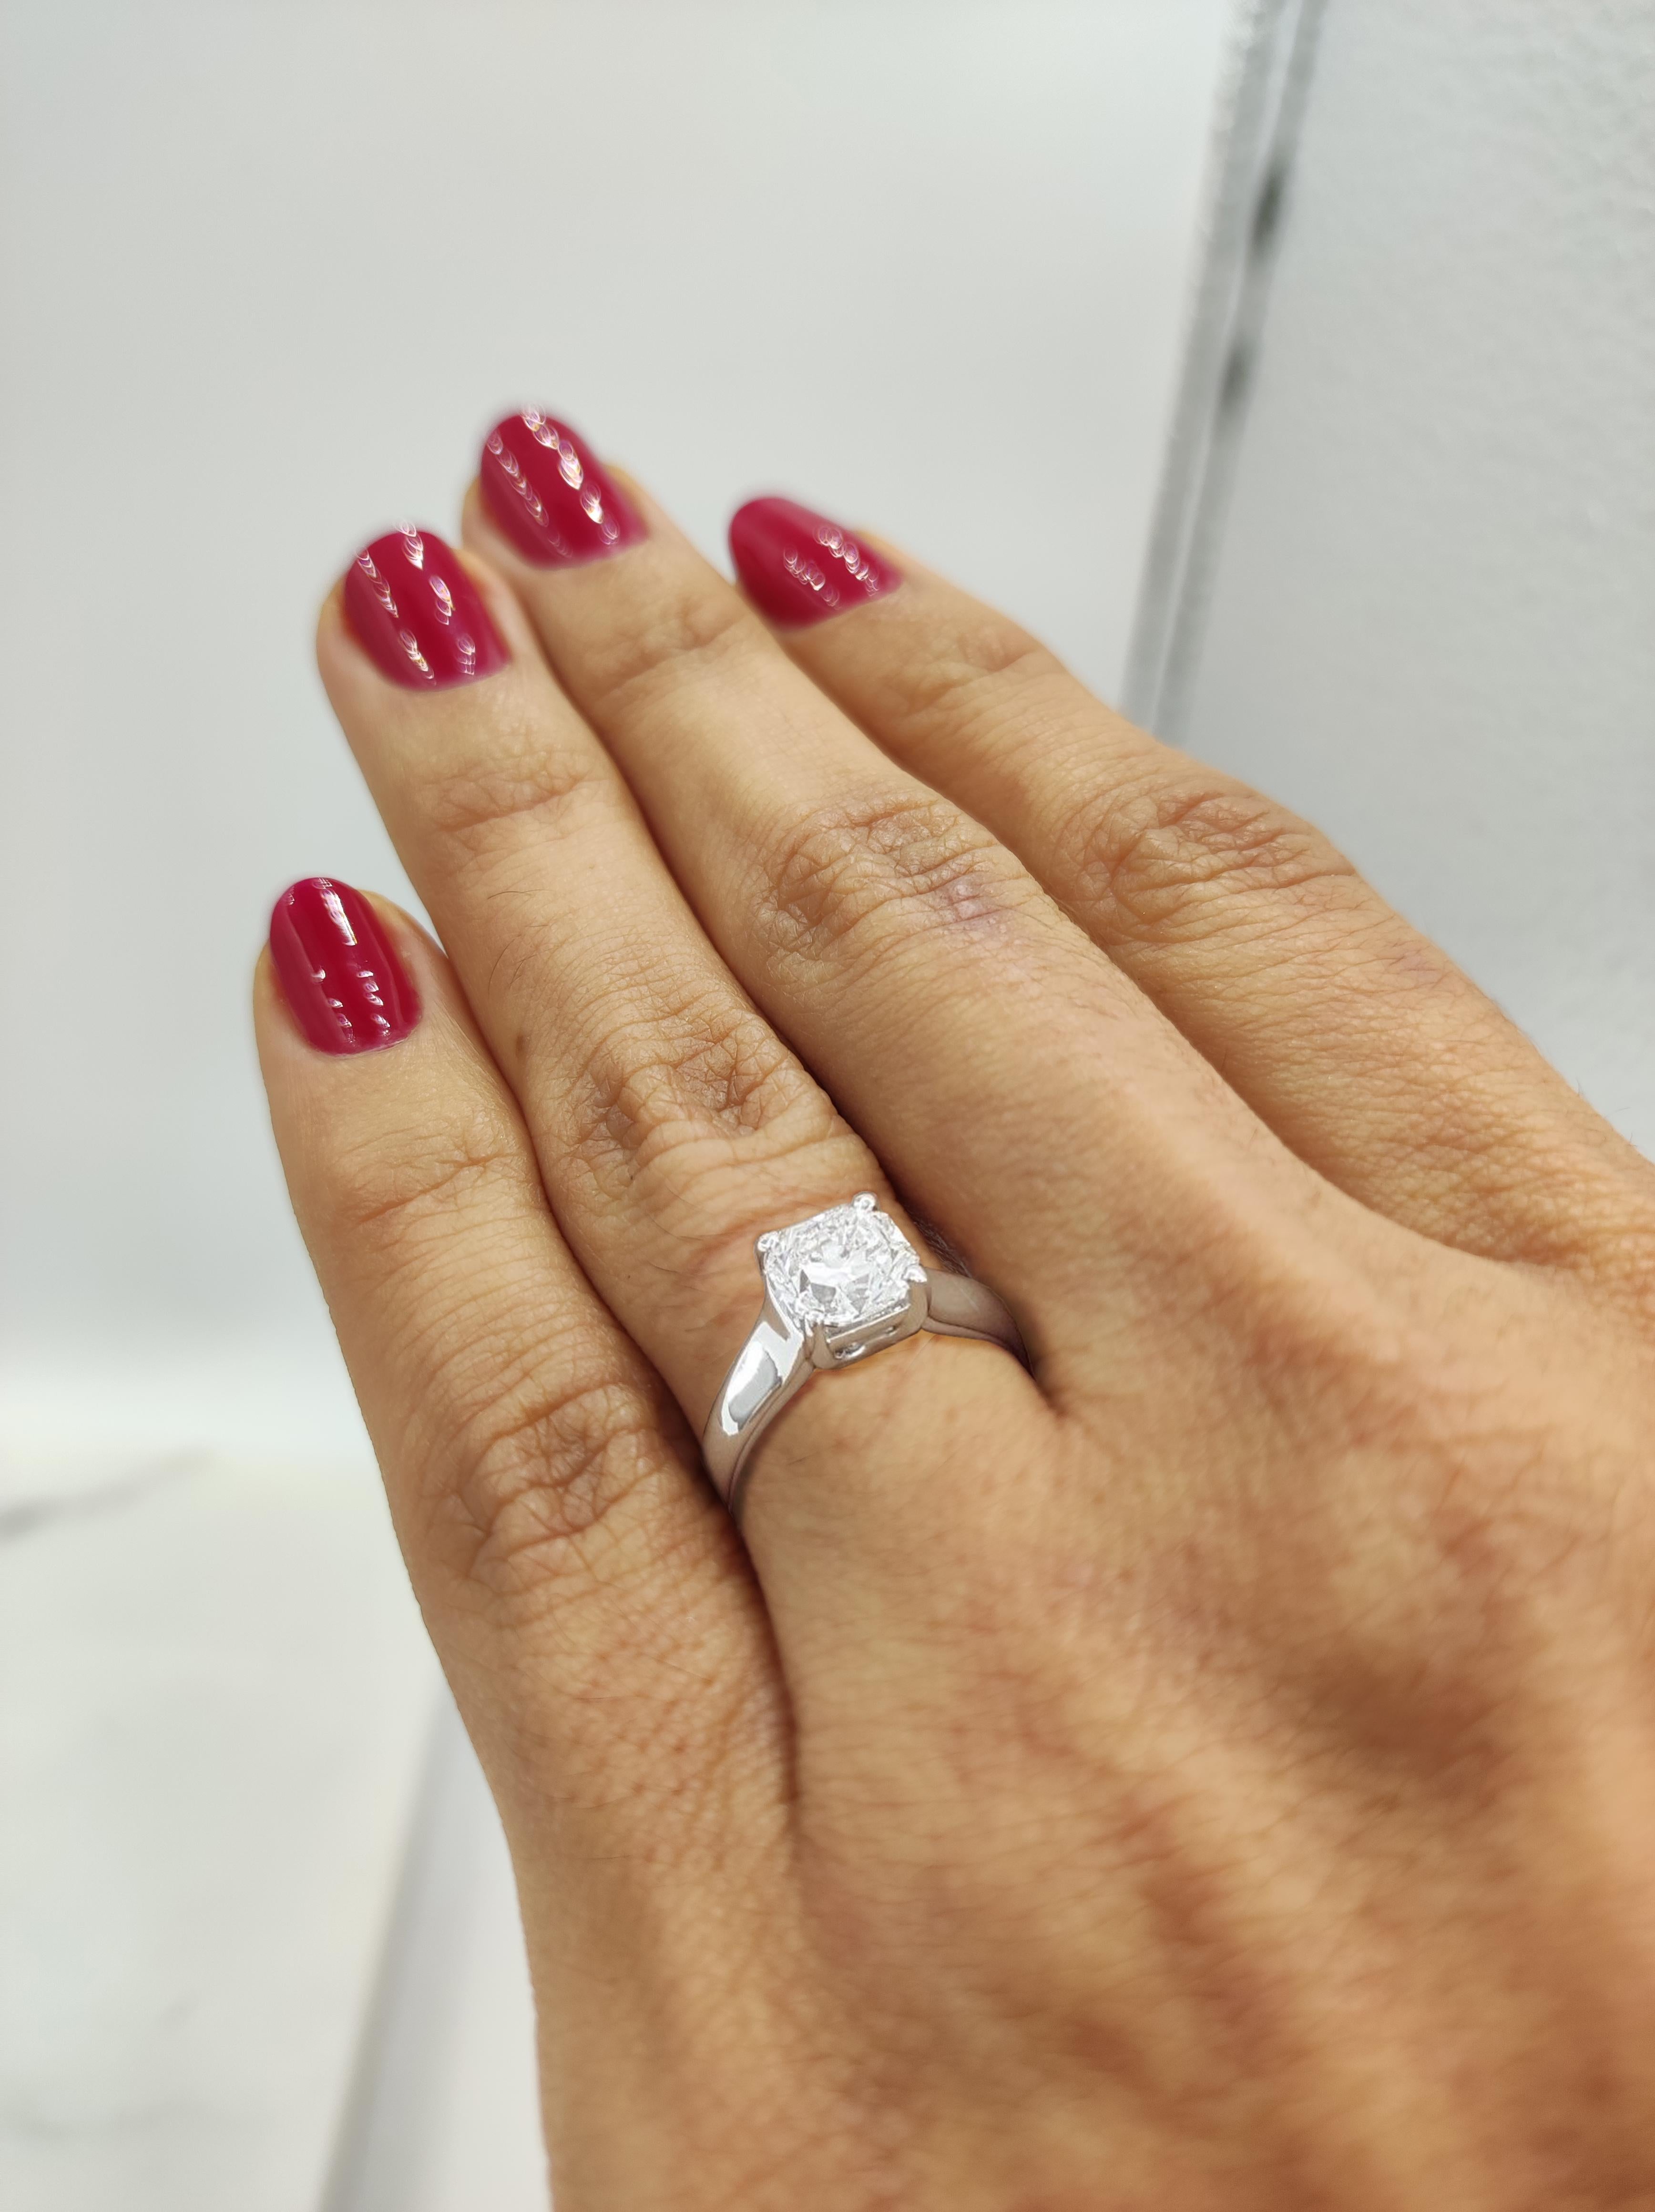 Radiant Cut Tiffany & Co. Lucida Platinum Diamond Ring For Sale